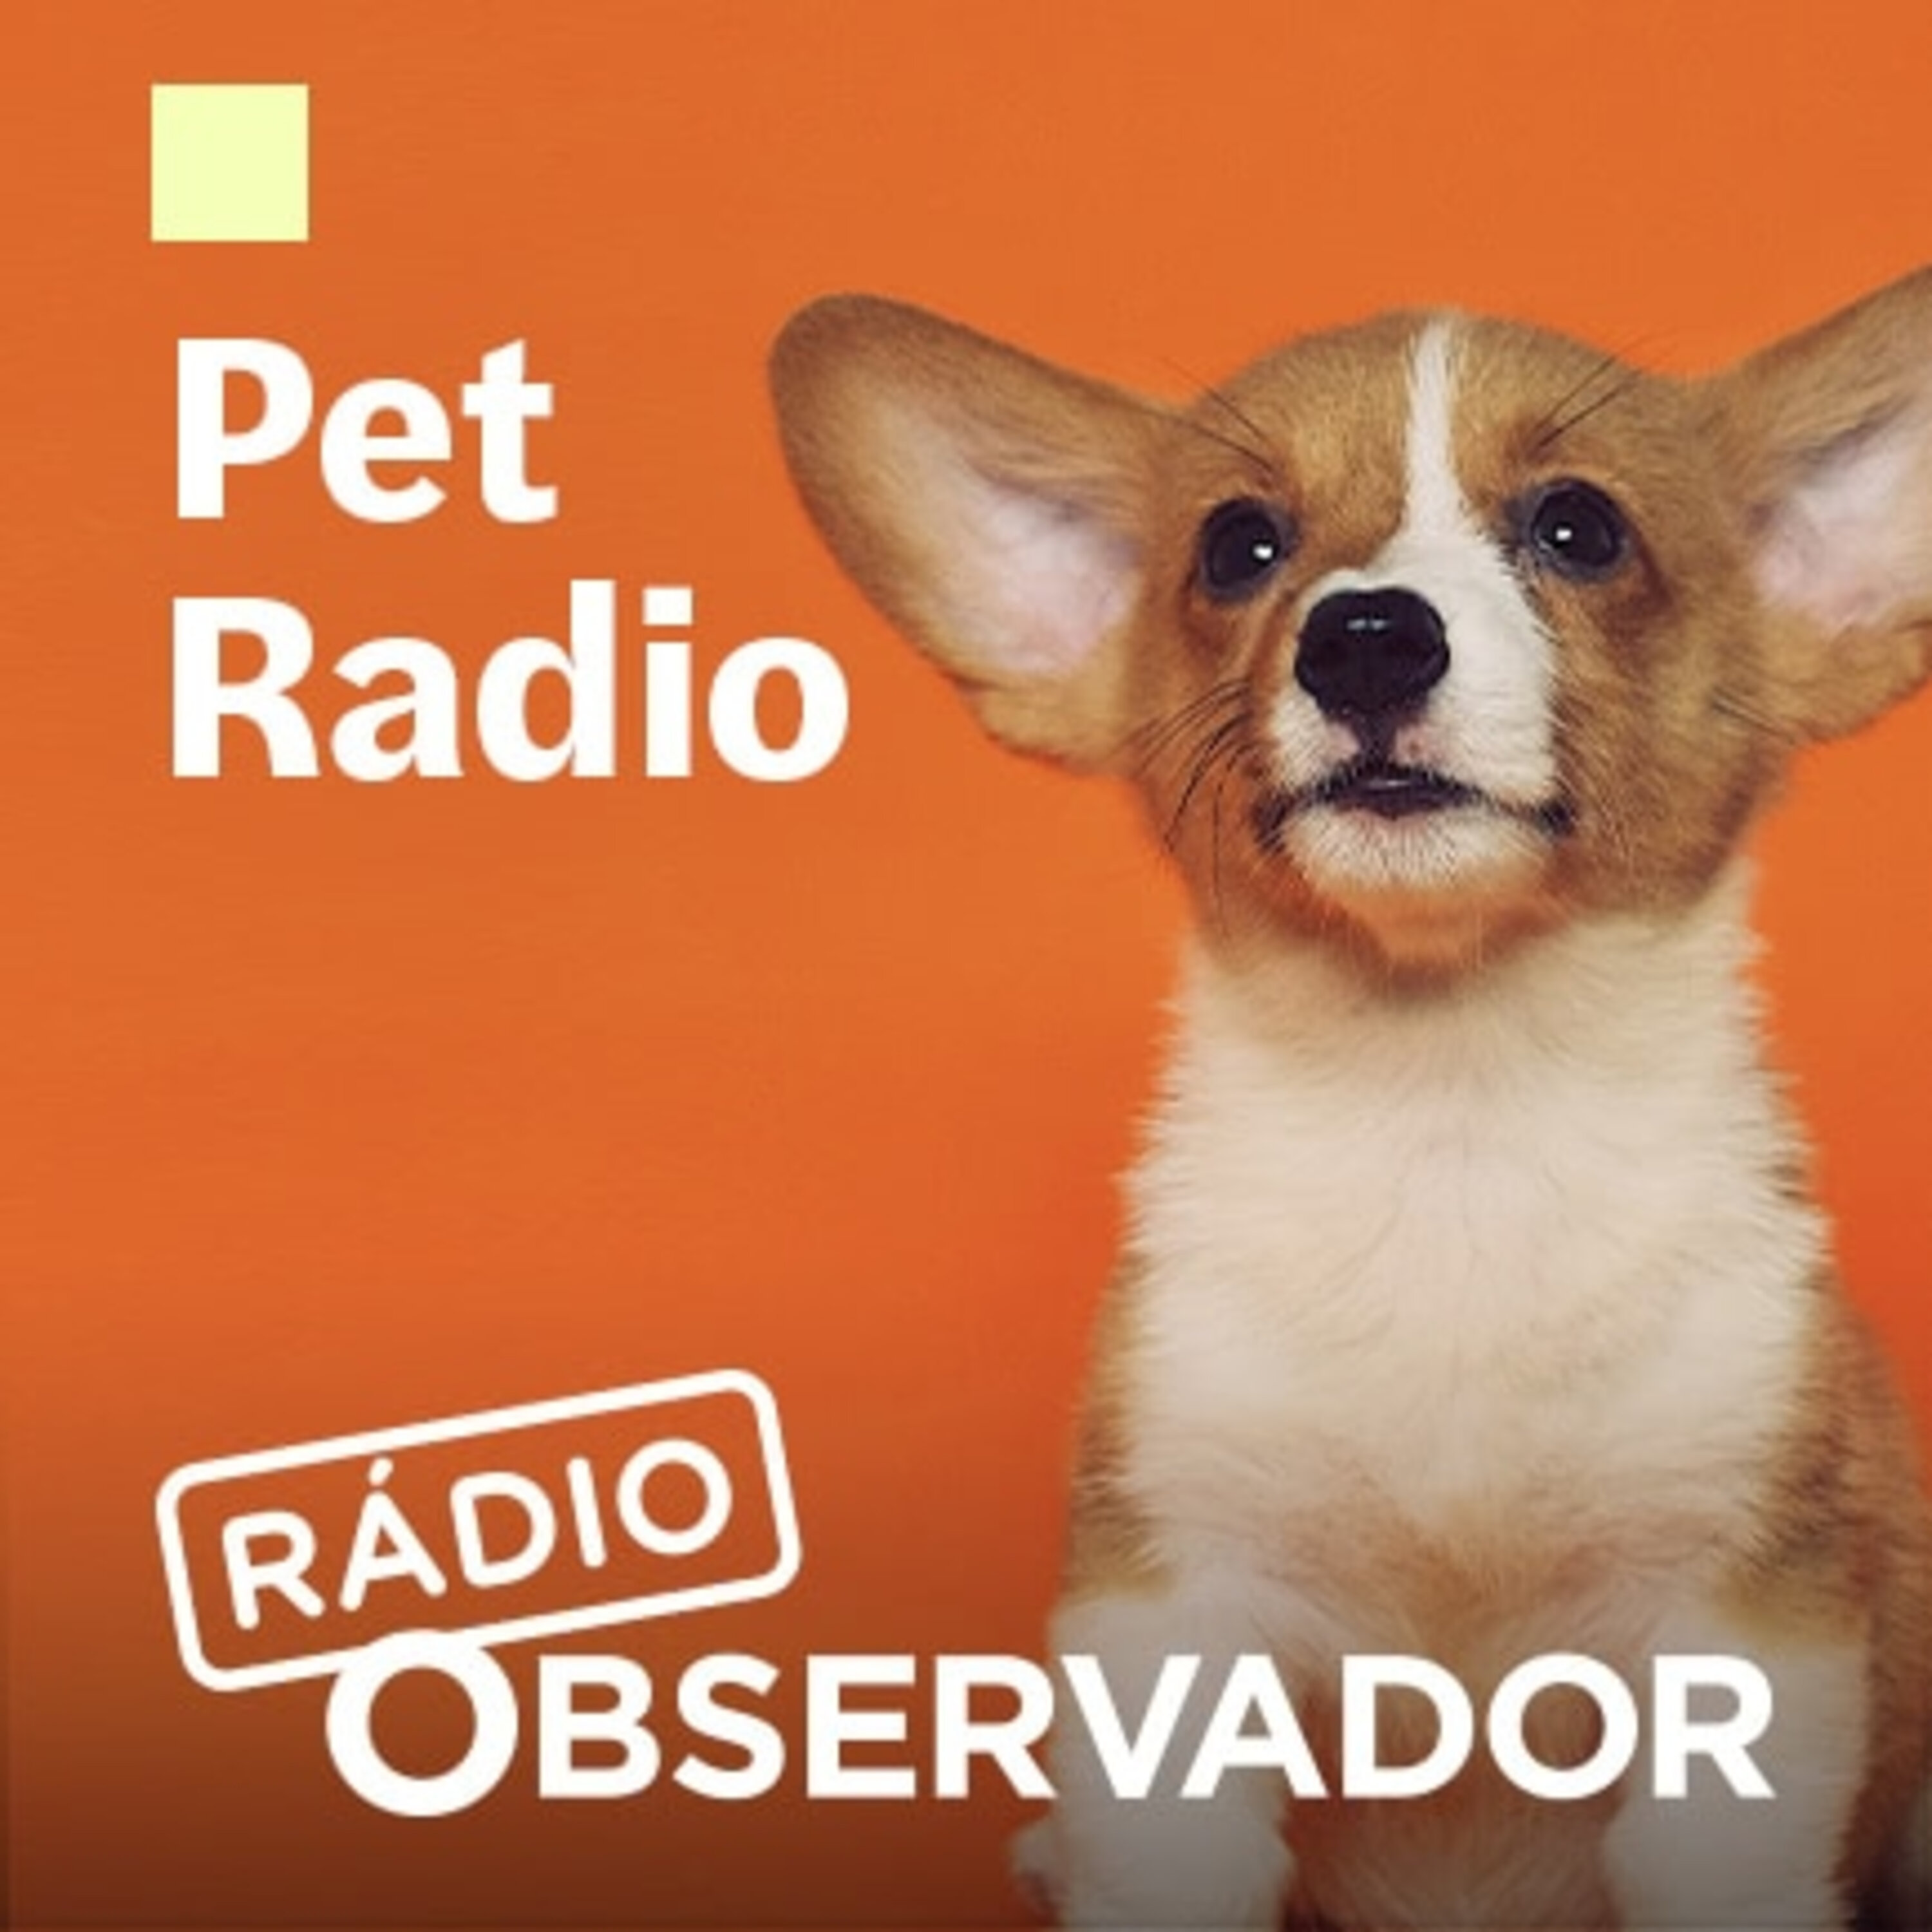 Радио и питомцы. Радио animal. Radio pets